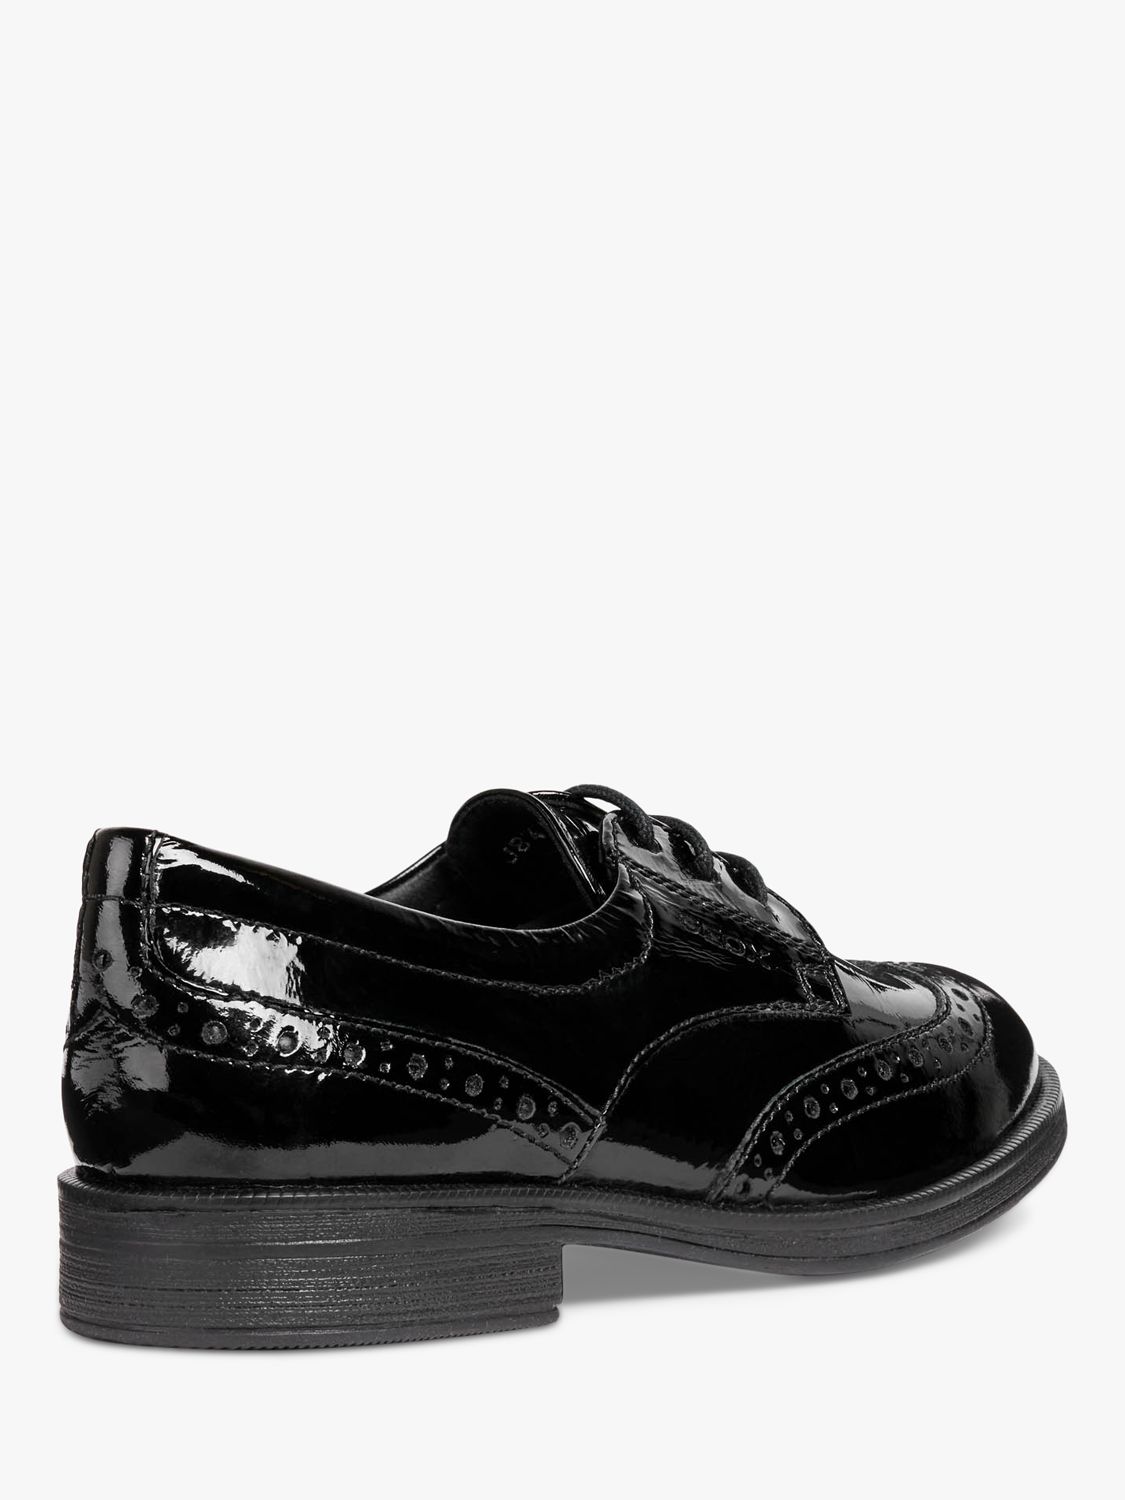 Geox Kids' Agata Lace-Up Brogue School Shoes, Black at John Lewis ...